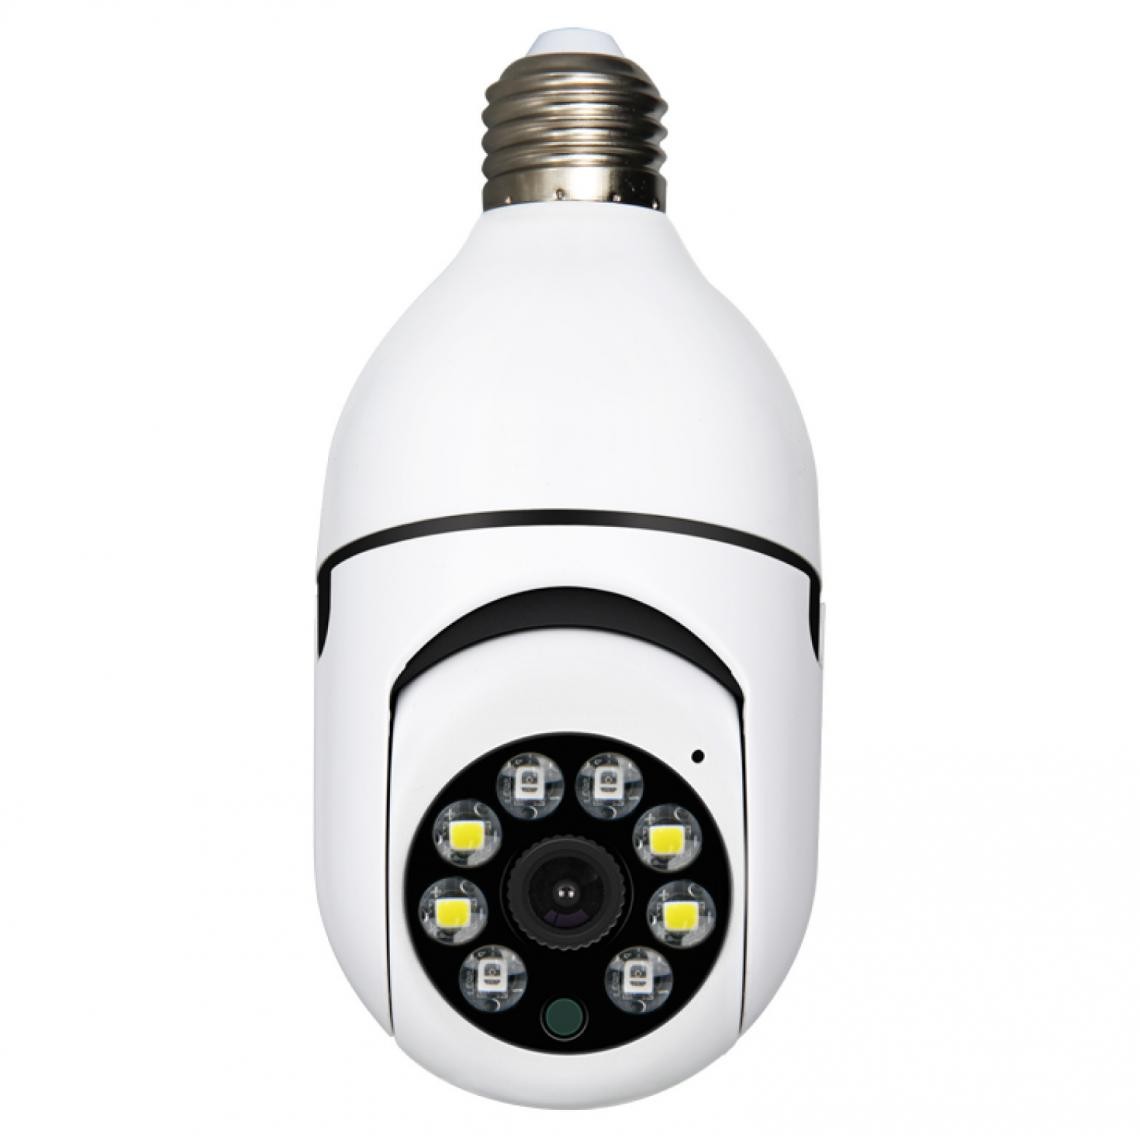 Ampoule Camera Surveillance WiFi sans Fil, 960P HD Caméra Fish Eye